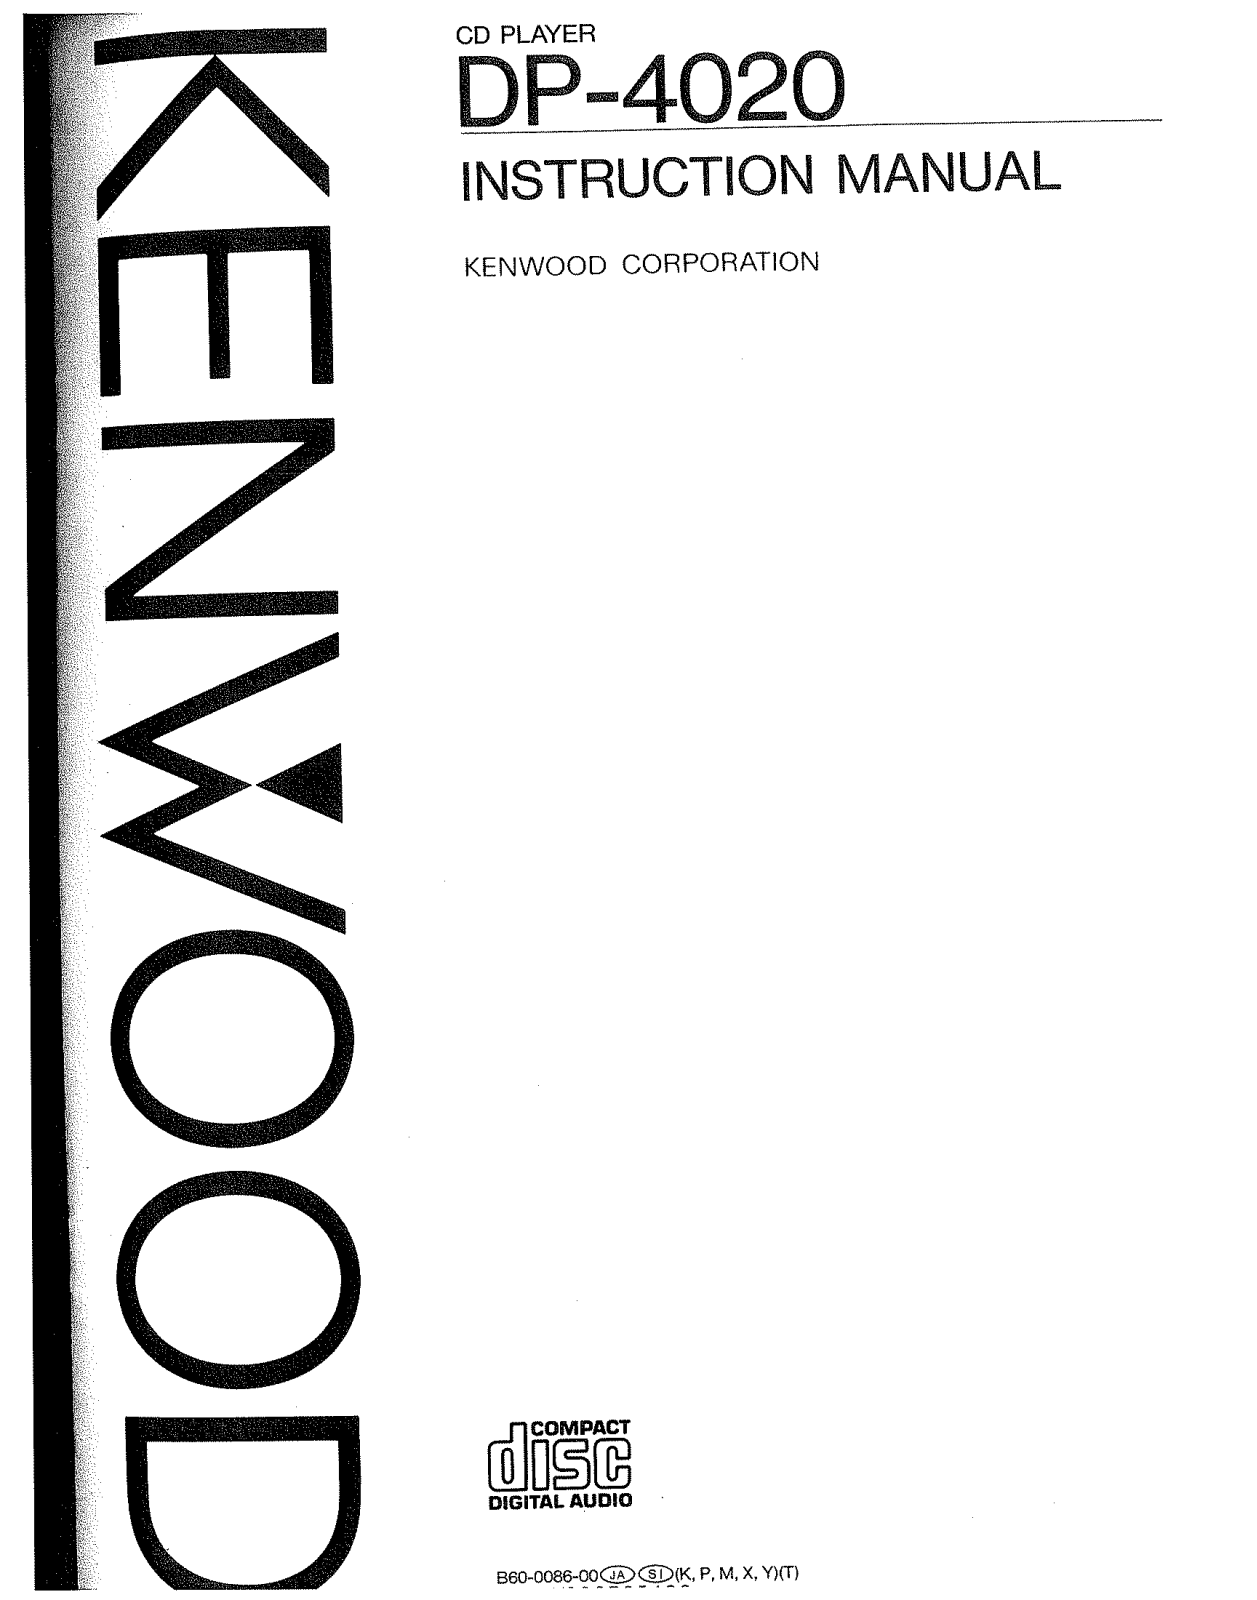 Kenwood DP-4020 Owner's Manual